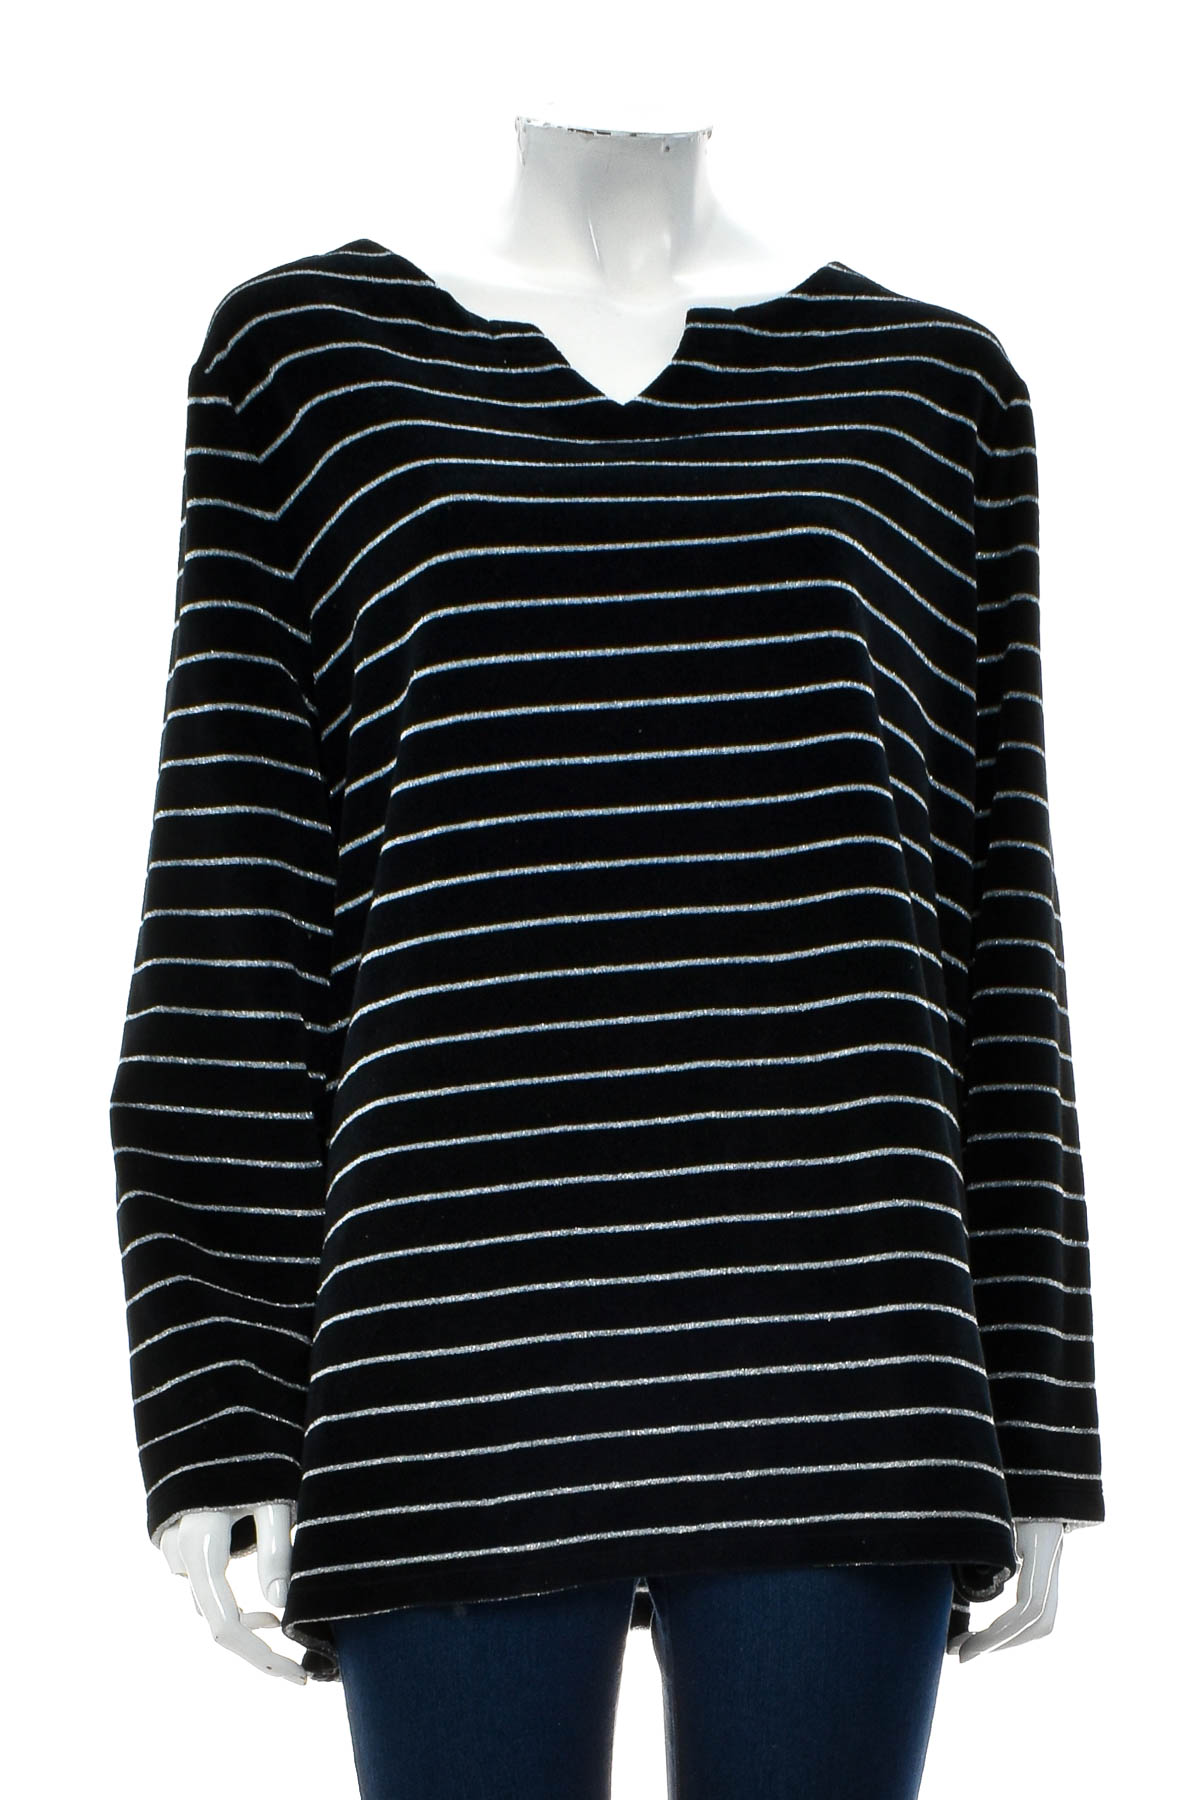 Women's sweater - Liz Claiborne - 0